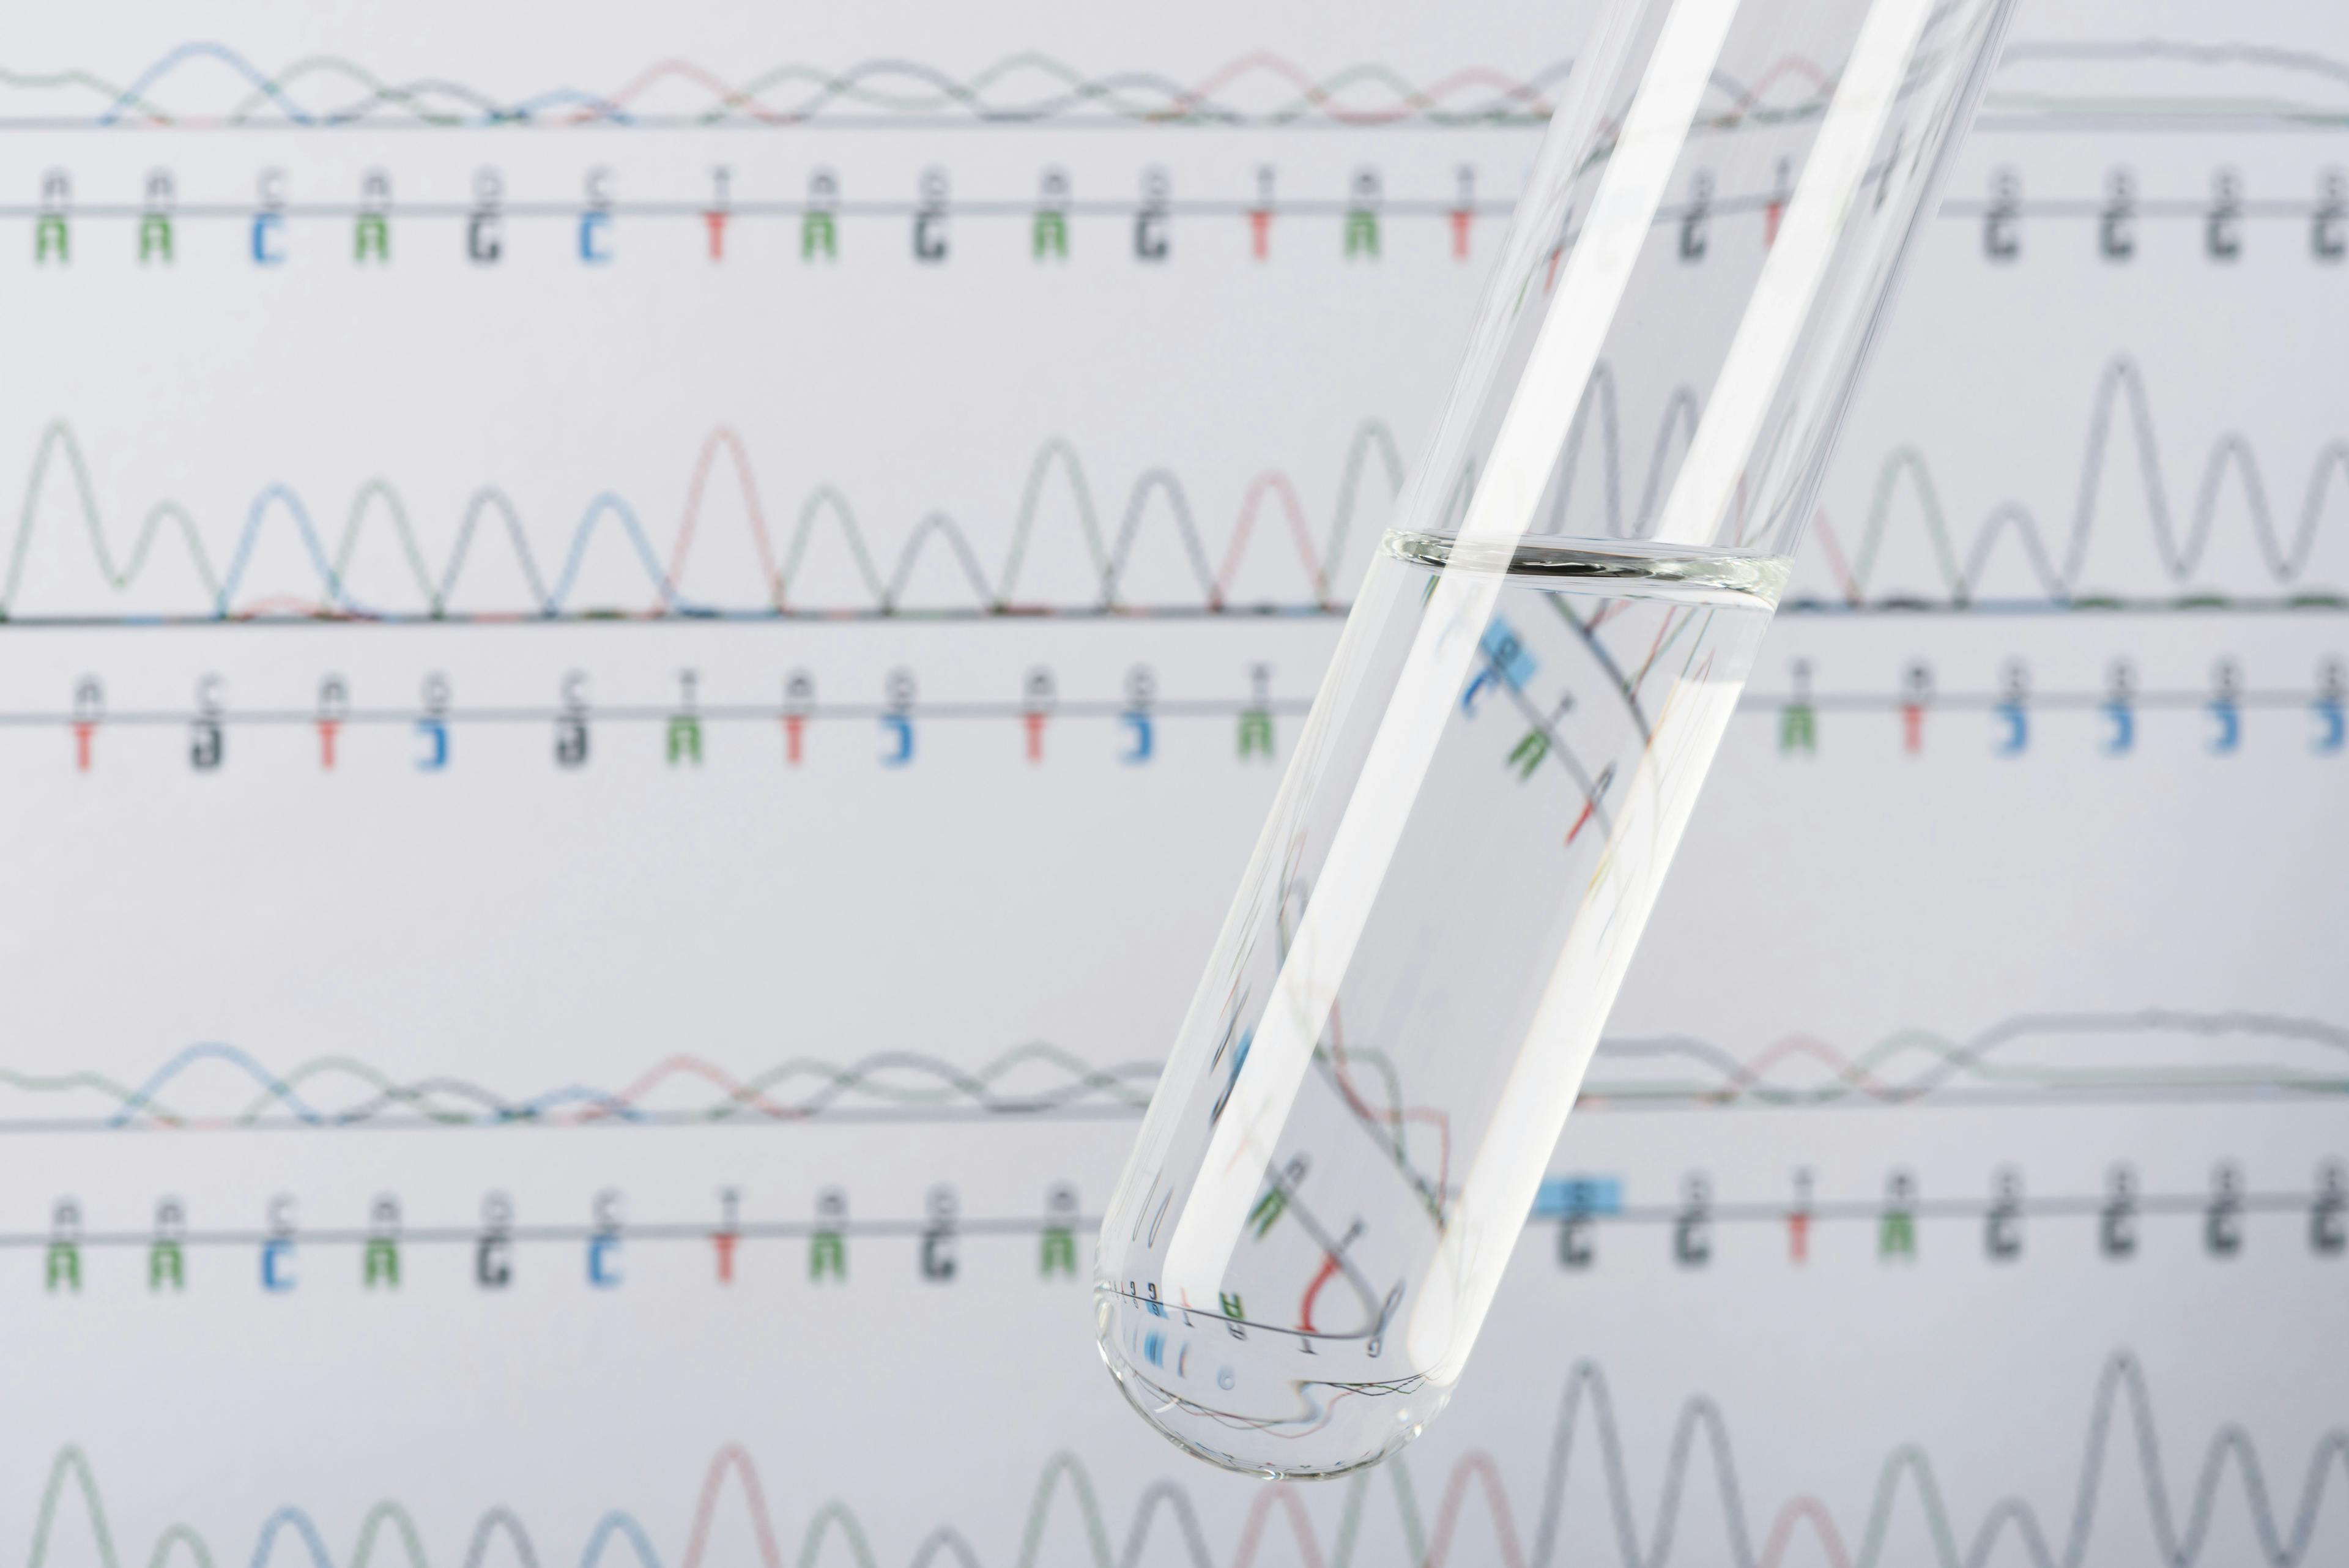 Test tube with transparent liquid and DNA chromatogram on background | Image Credit: © nevodka.com - stock.adobe.com